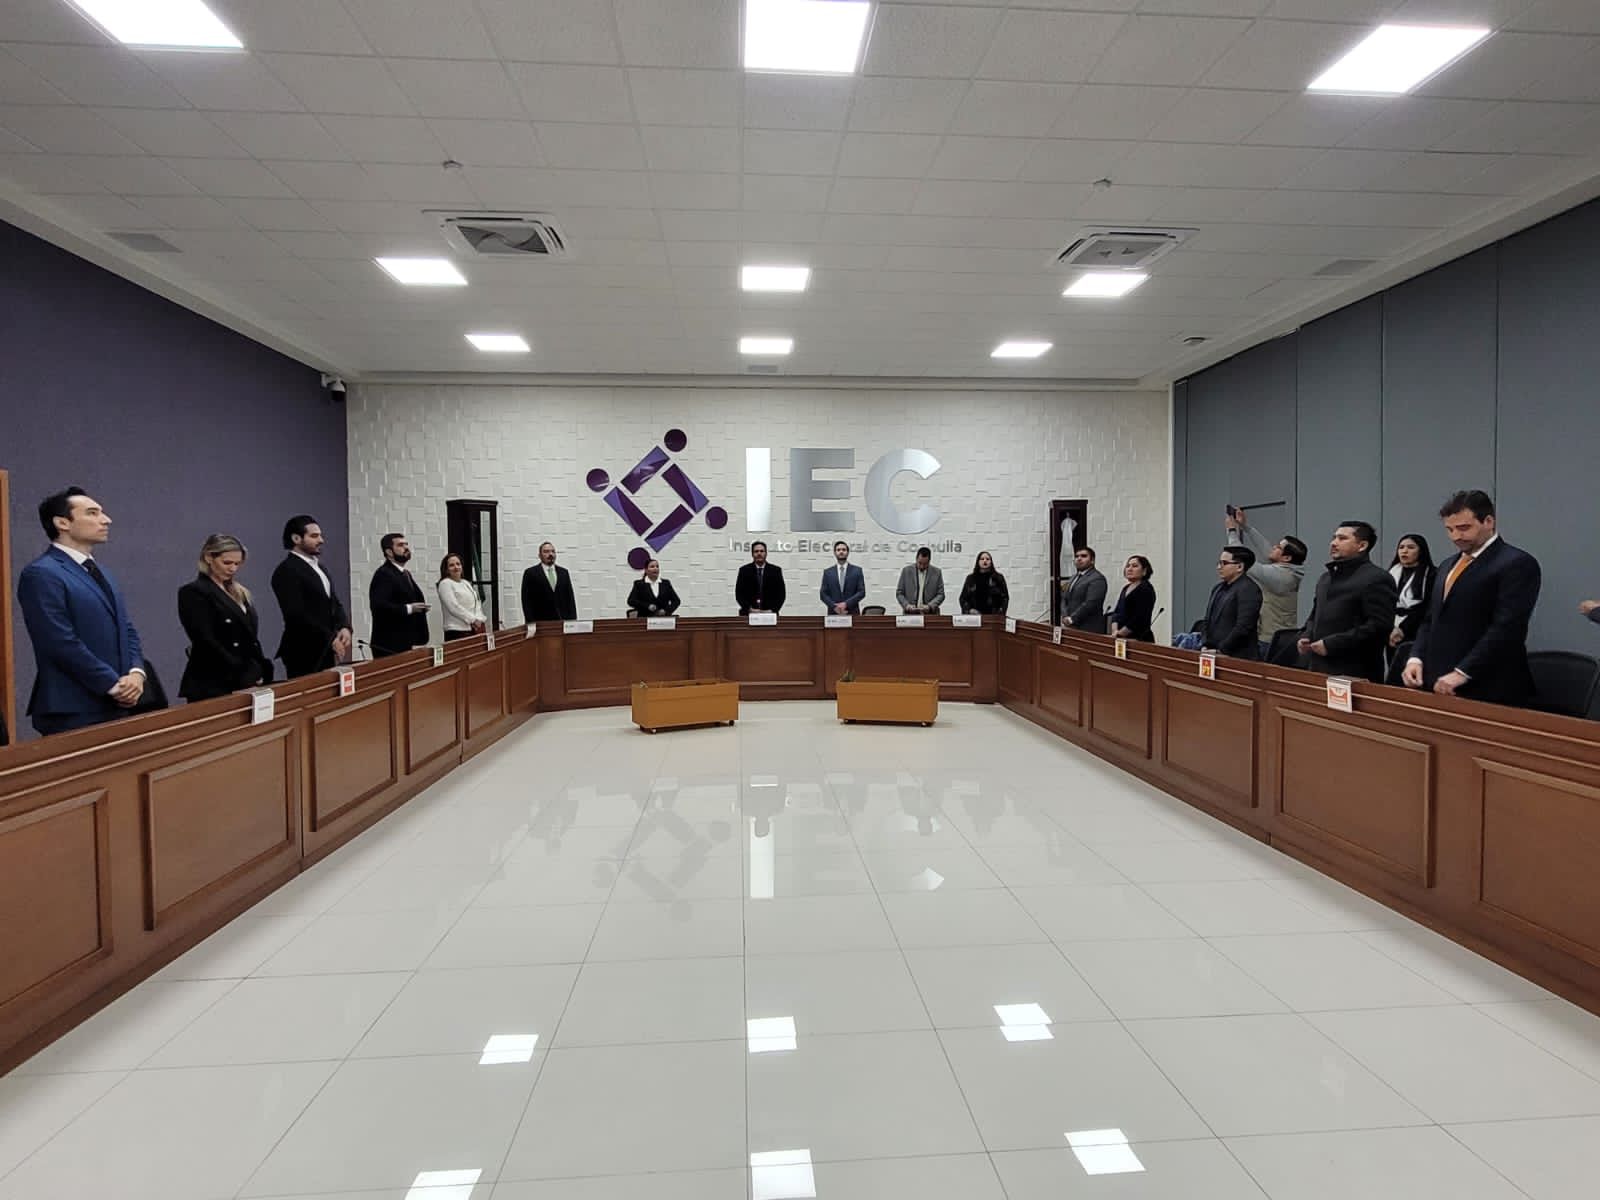  Instituto Electoral de Coahuila. 